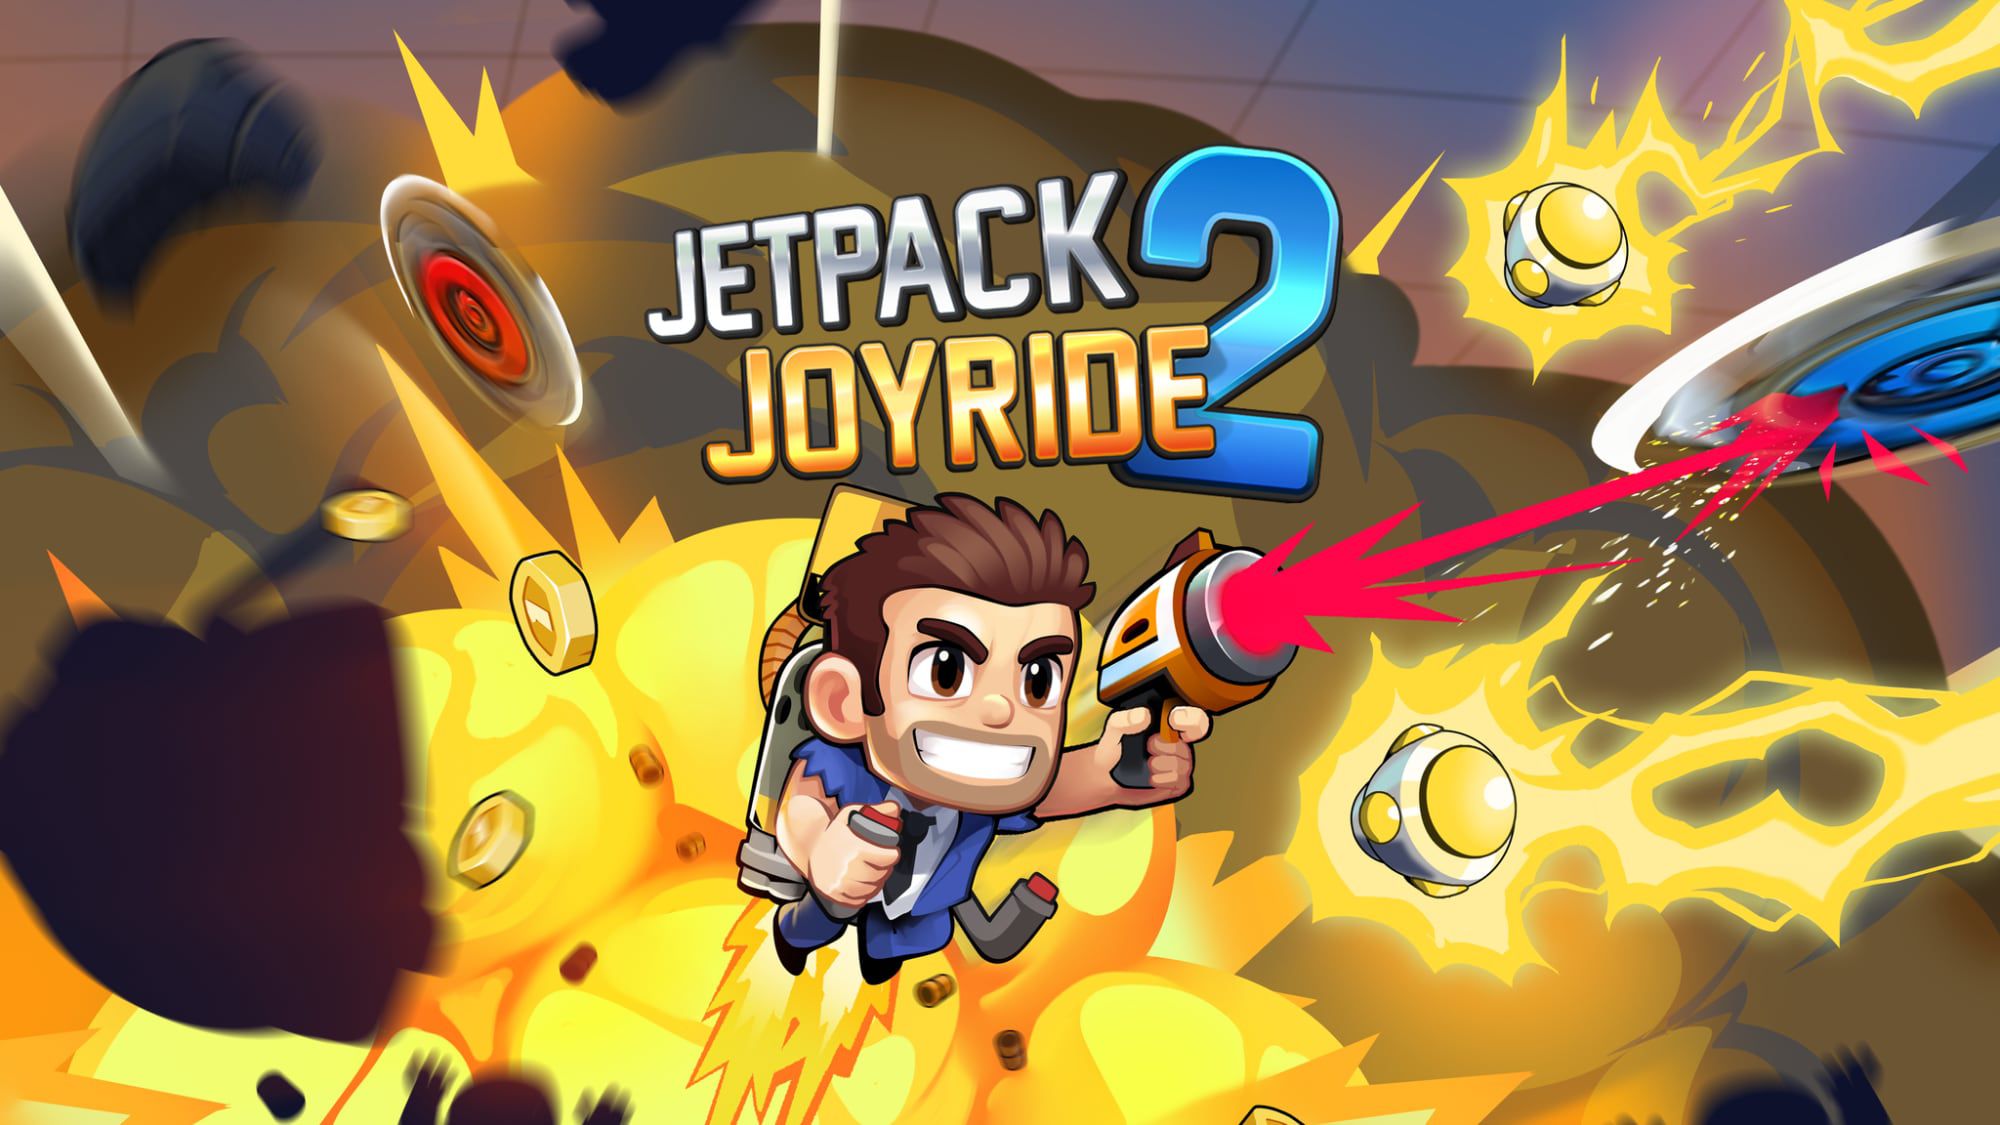 Jetpack Joyride 2 Comes to Apple Arcade